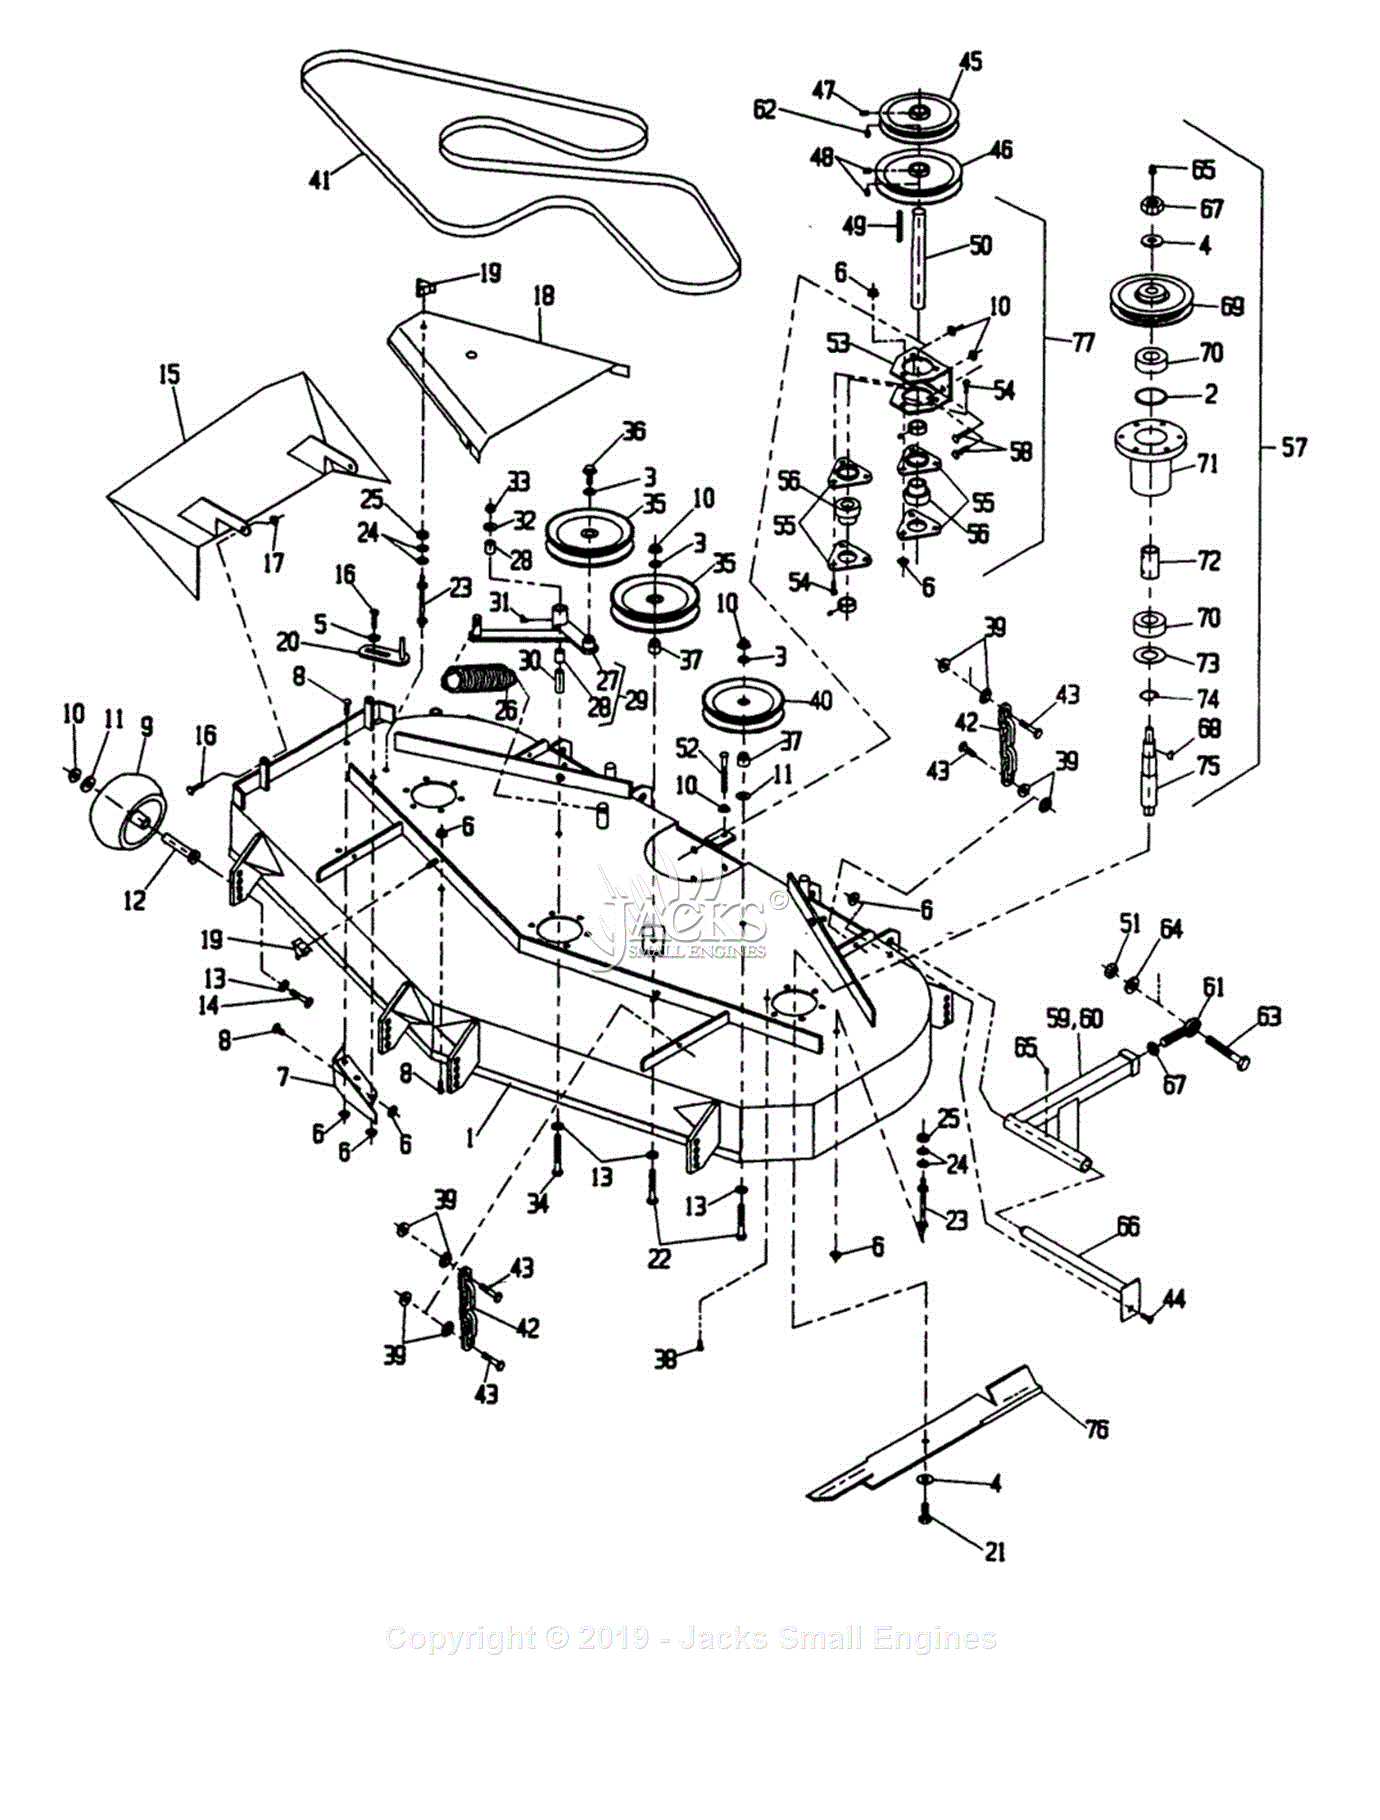 37 exmark lazer z hp drive belt diagram Wiring Diagram Info